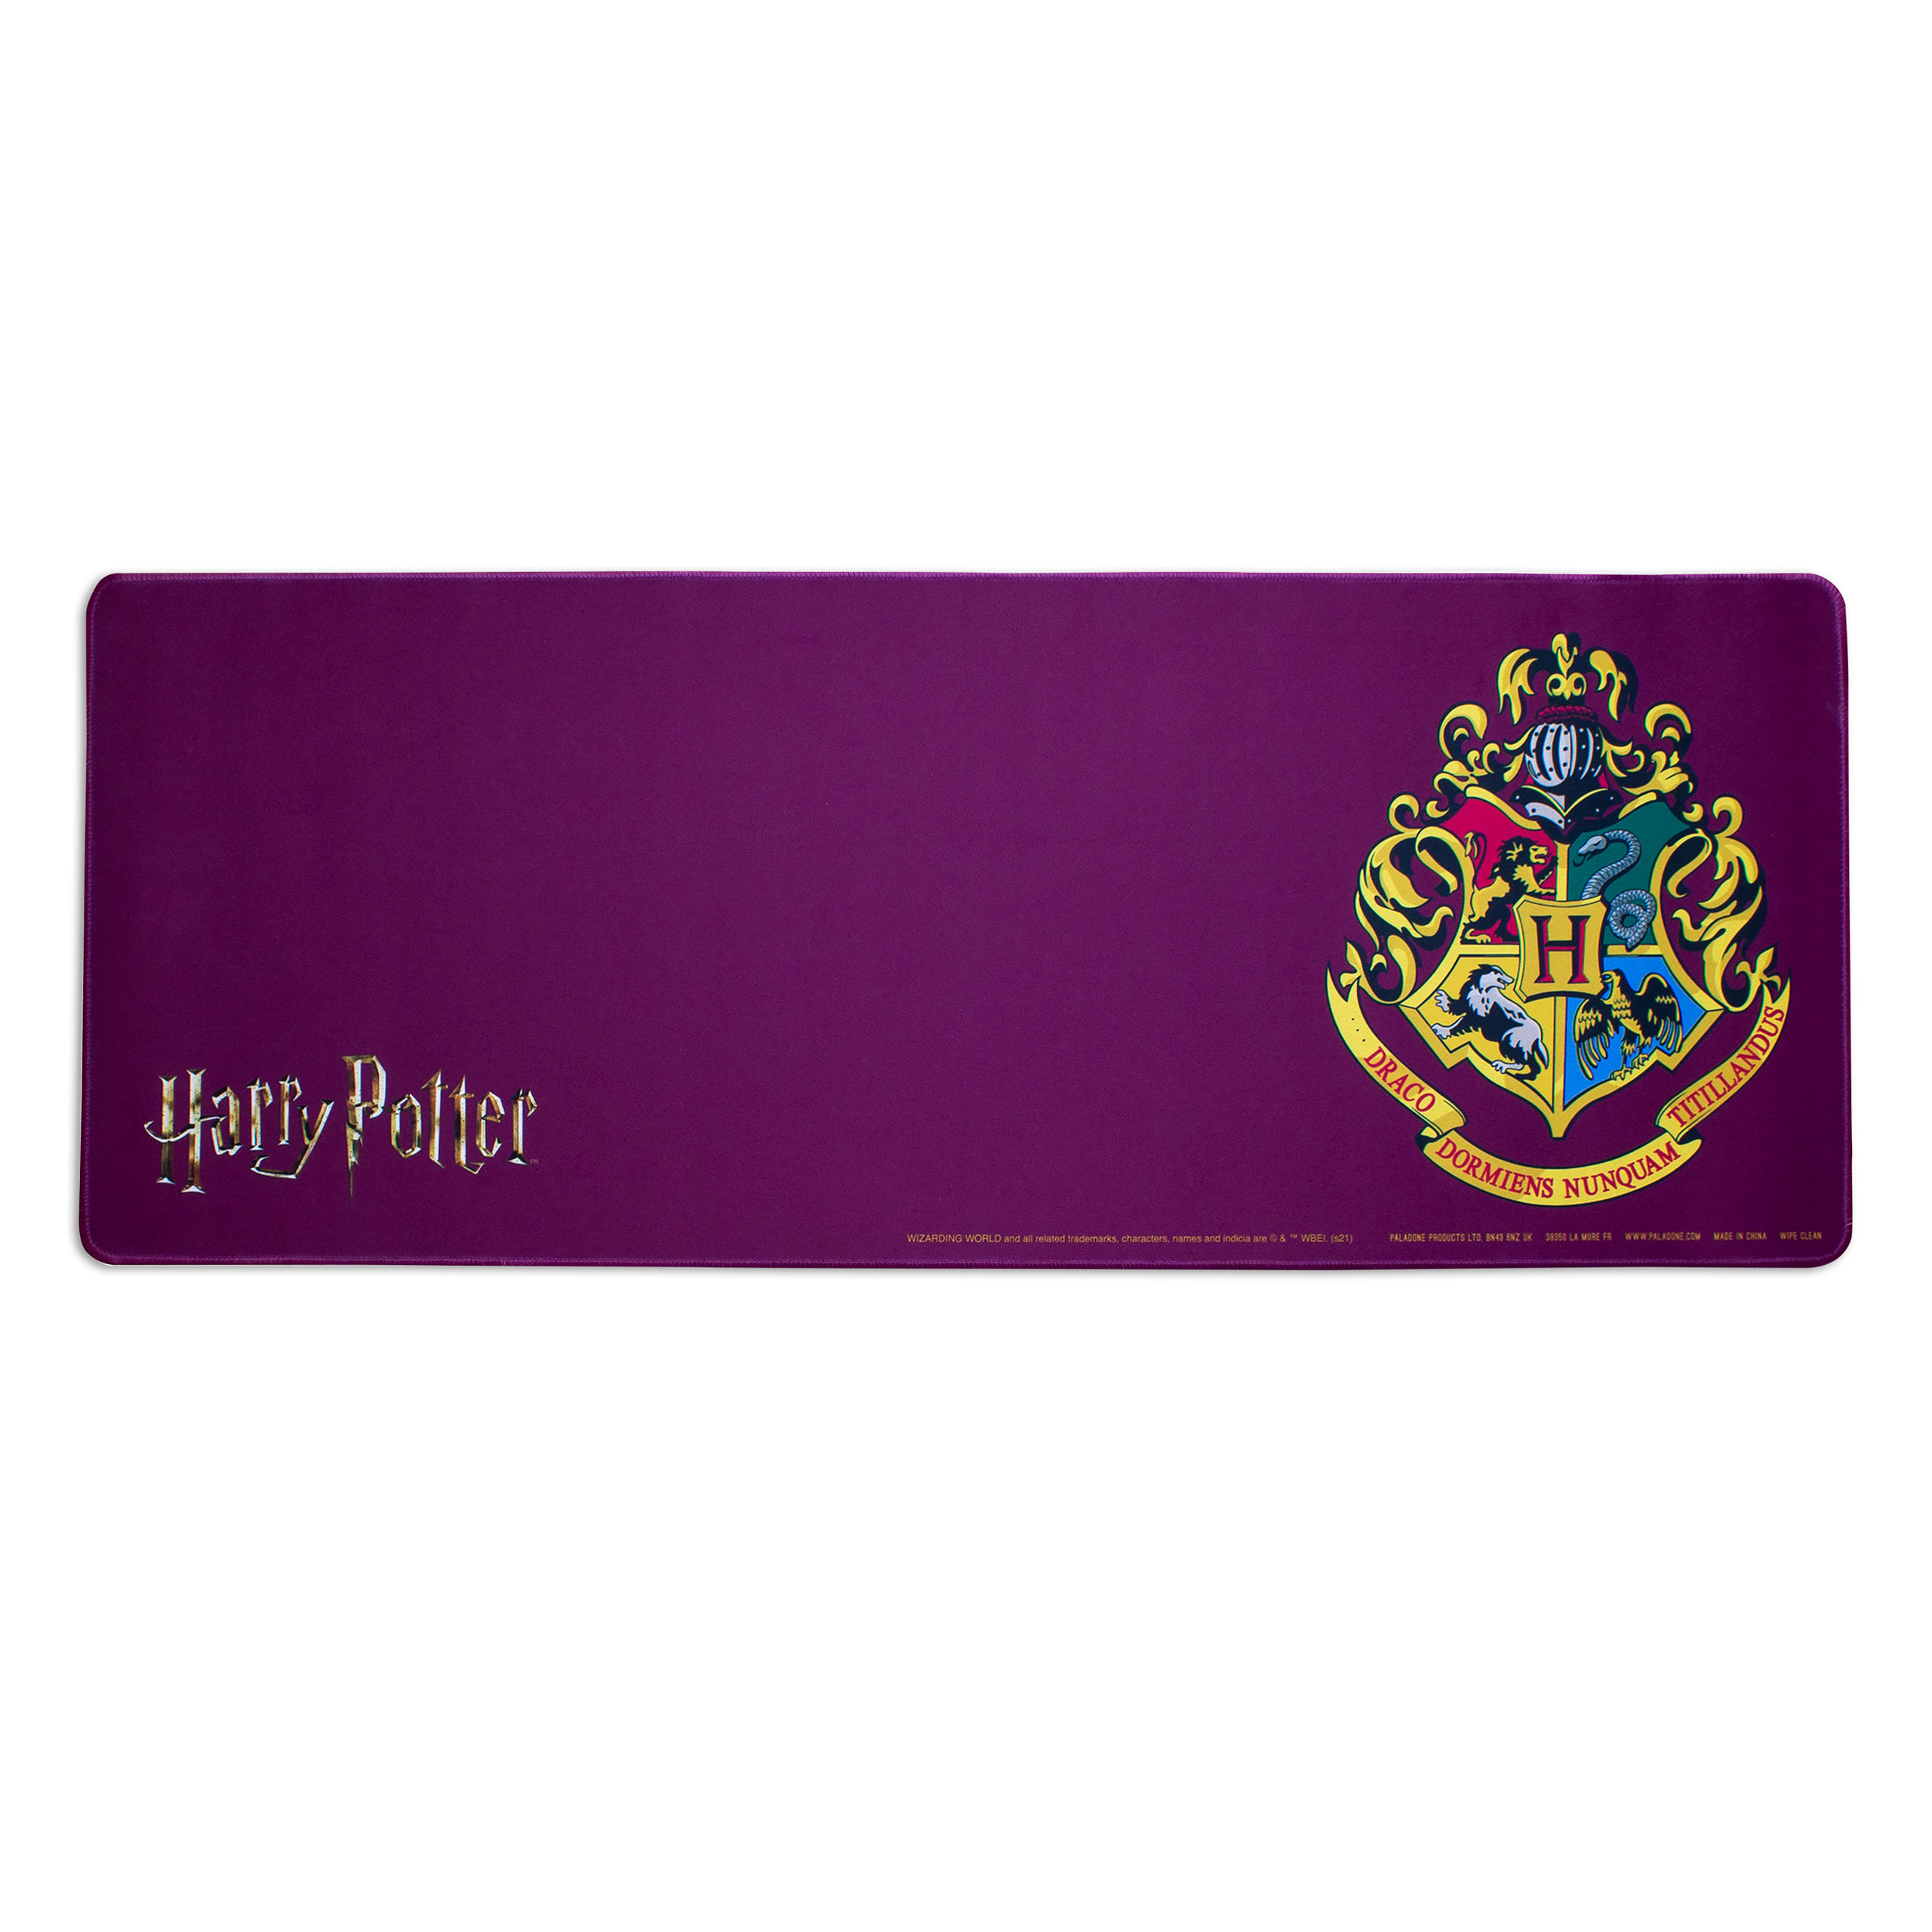 Harry Potter - Hogwarts Crest Mousepad